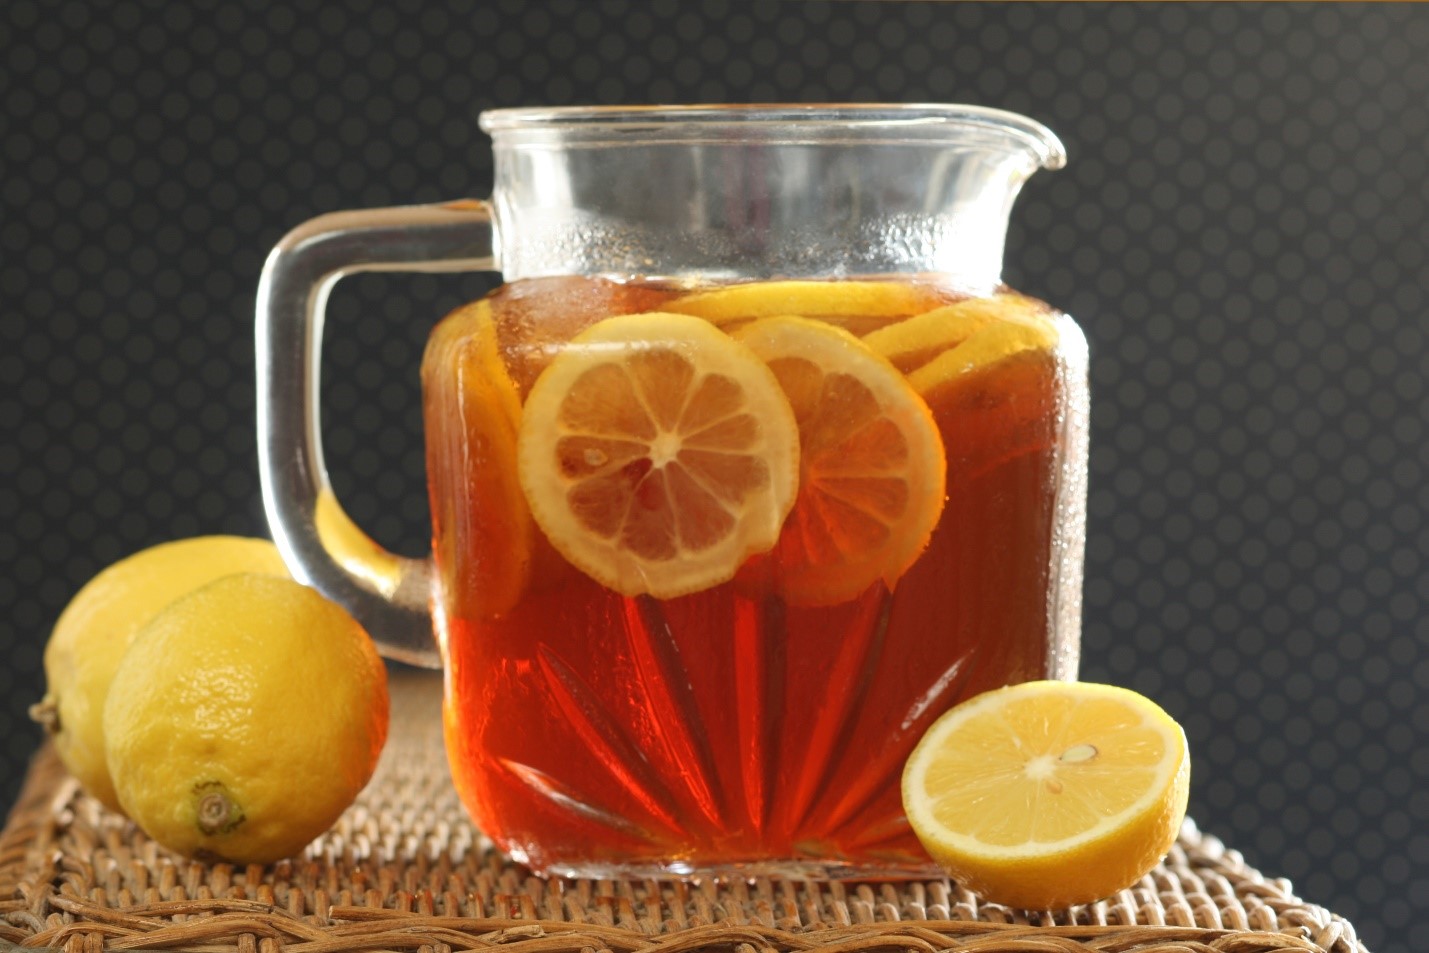 Lipton Cold Brew Iced Tea Recipe